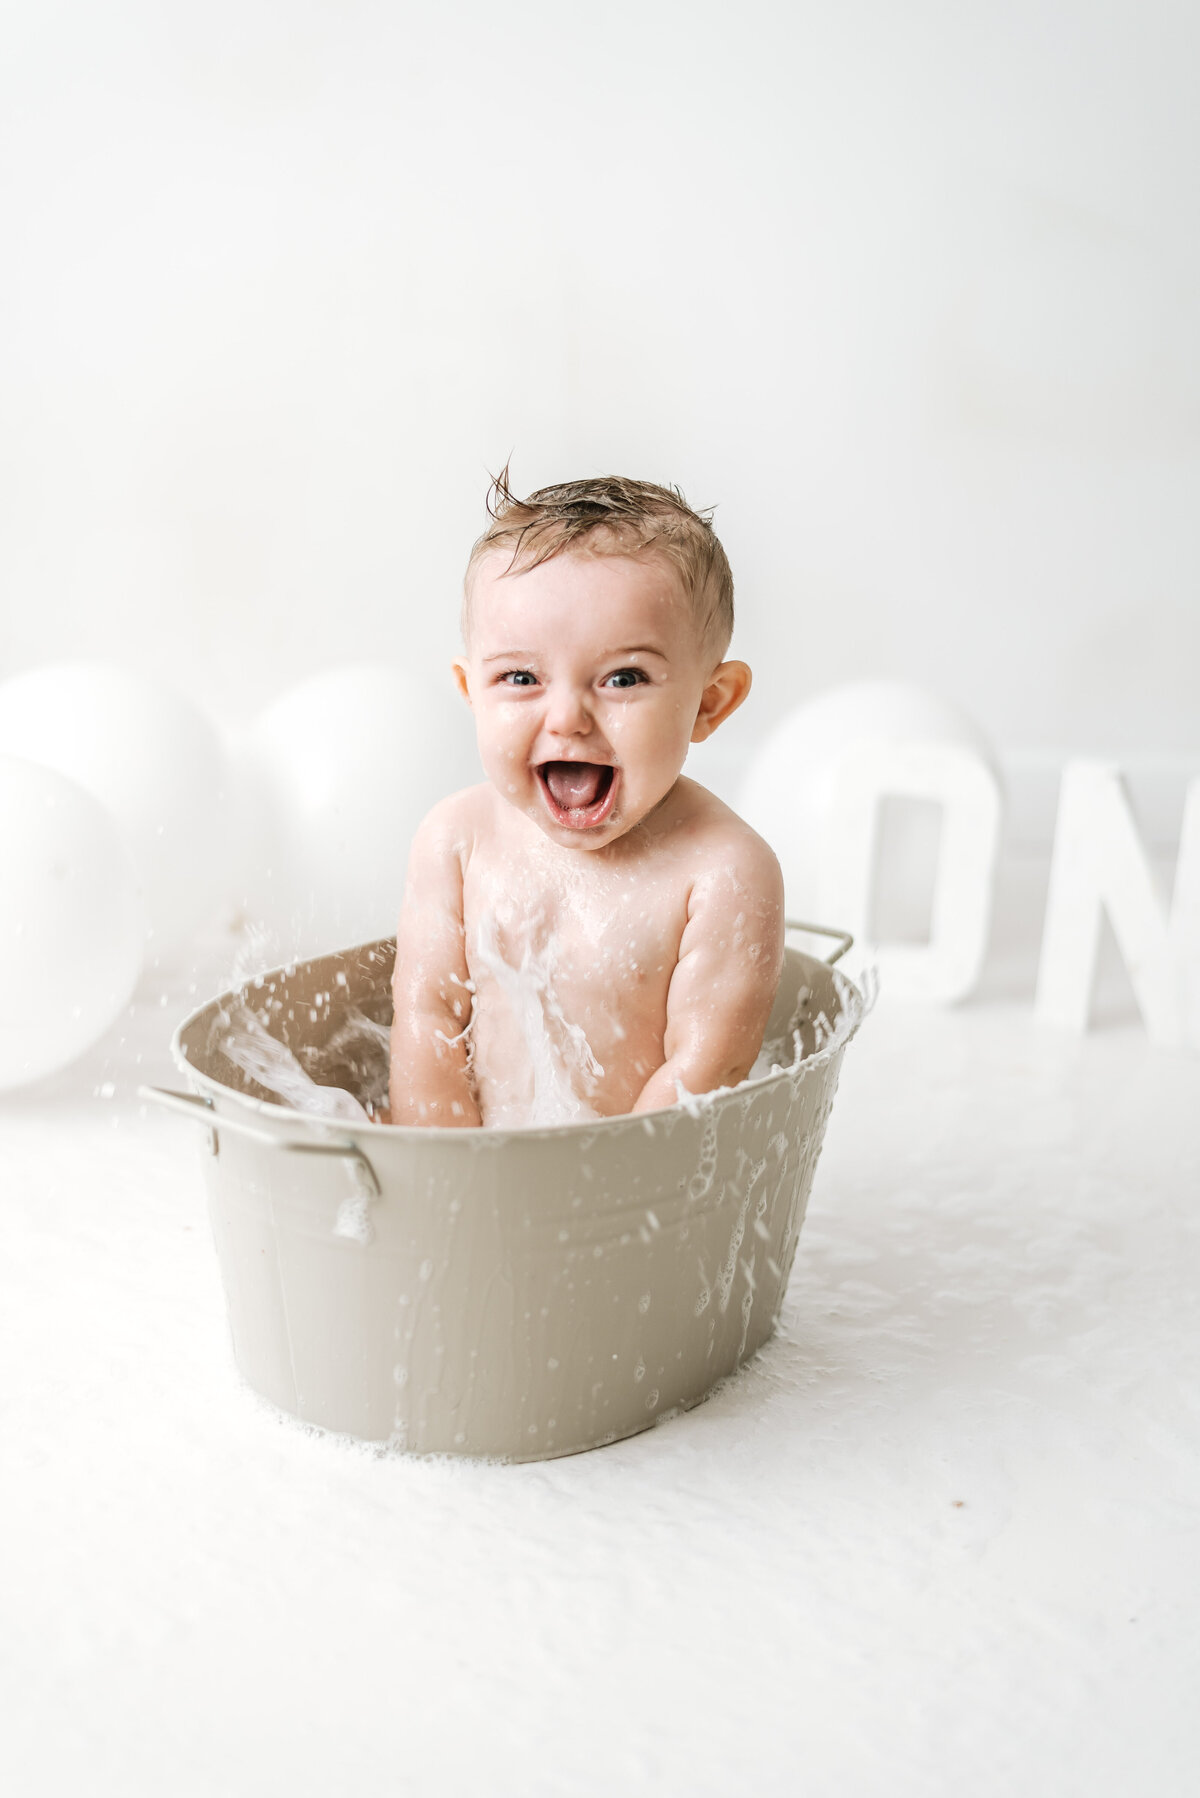 Baby boy in the bath splashing bubbles at cake smash photoshoot in Billingshurst